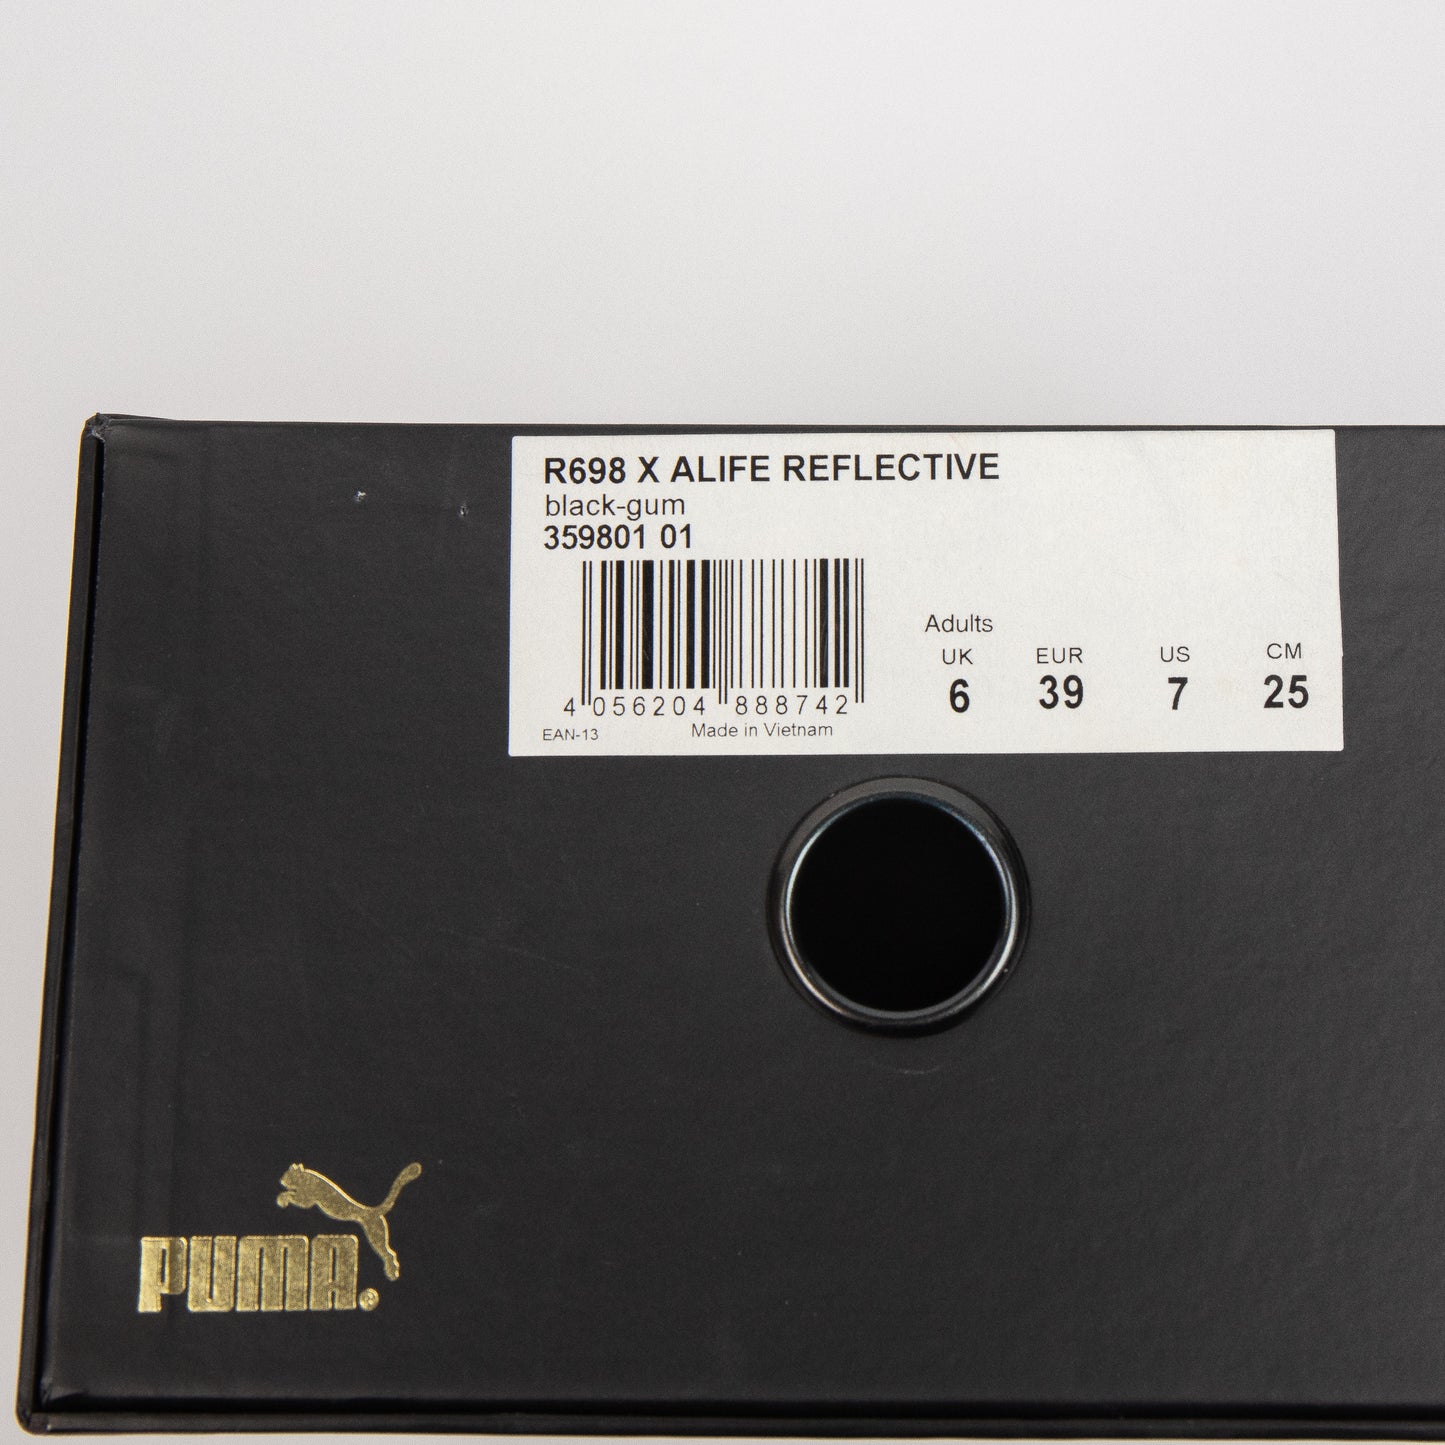 Puma x Alife R698 Reflective - 39